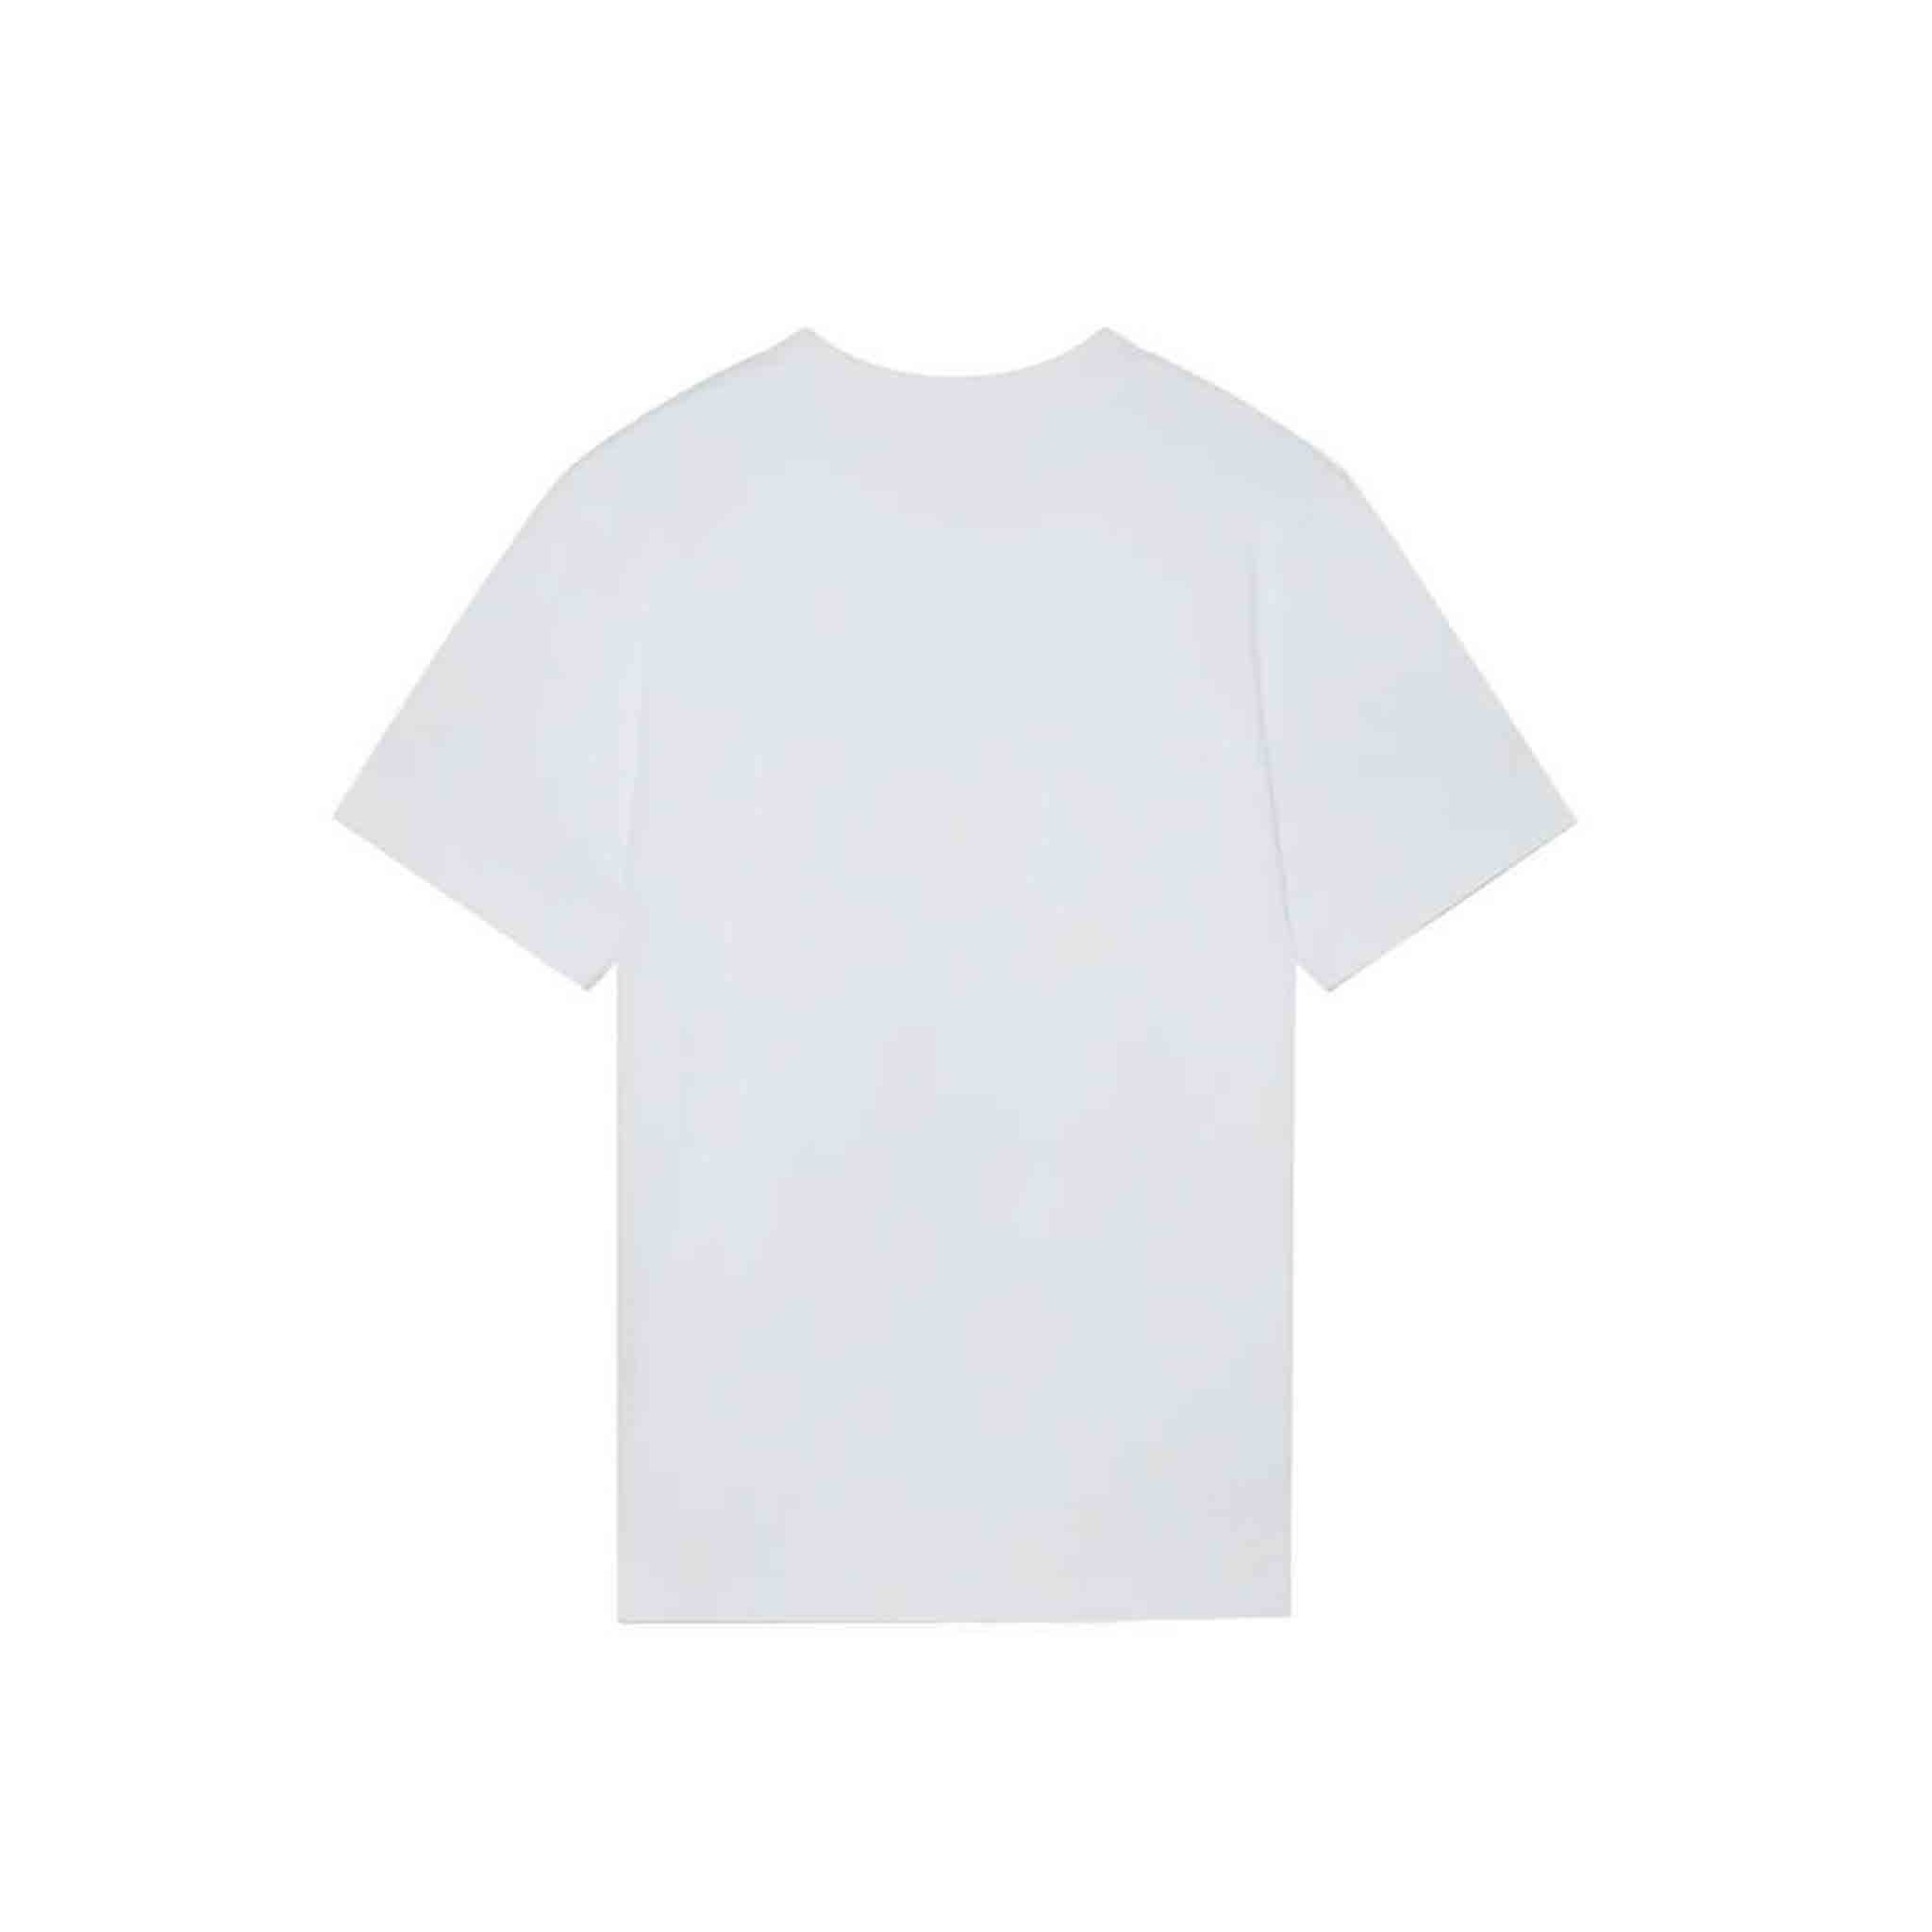 Casa Blanca Talisman T-Shirt in White